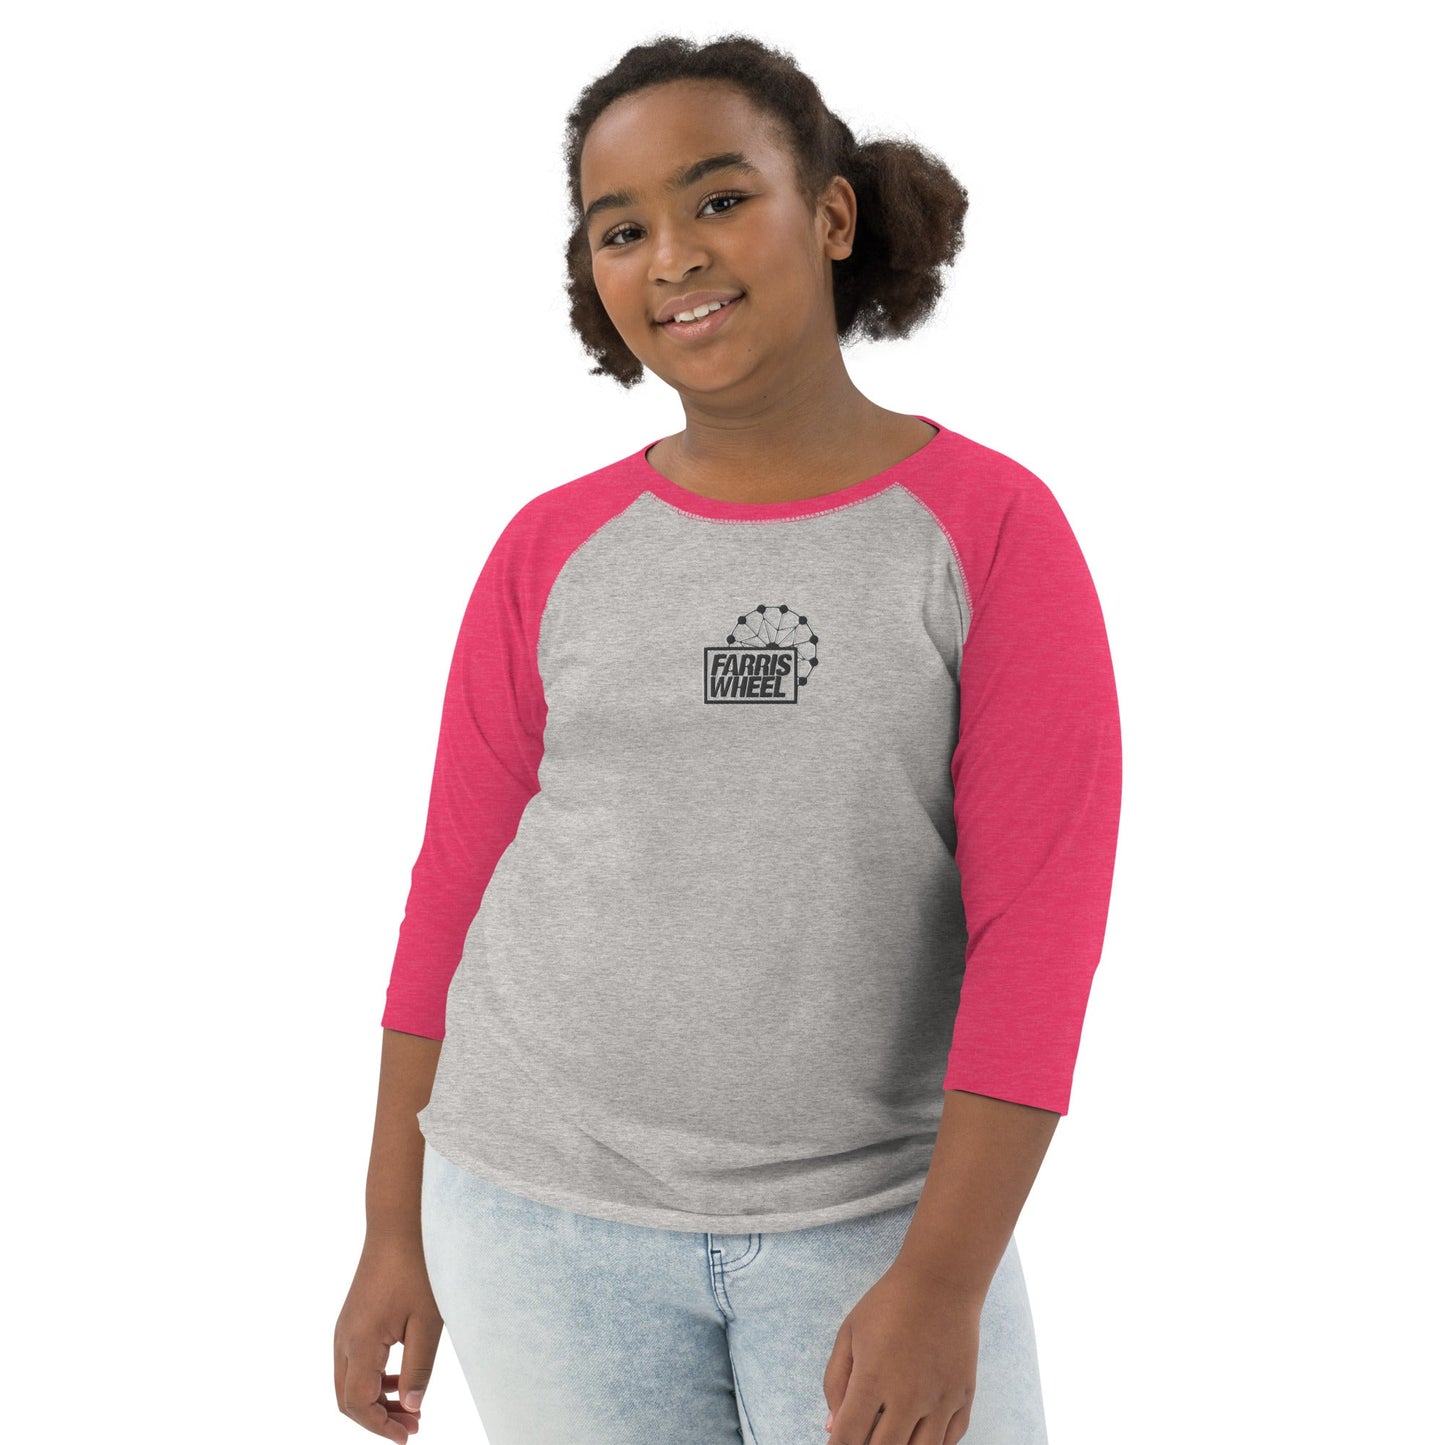 Farris Wheel Kids Baseball Shirt - BeExtra! Apparel & More